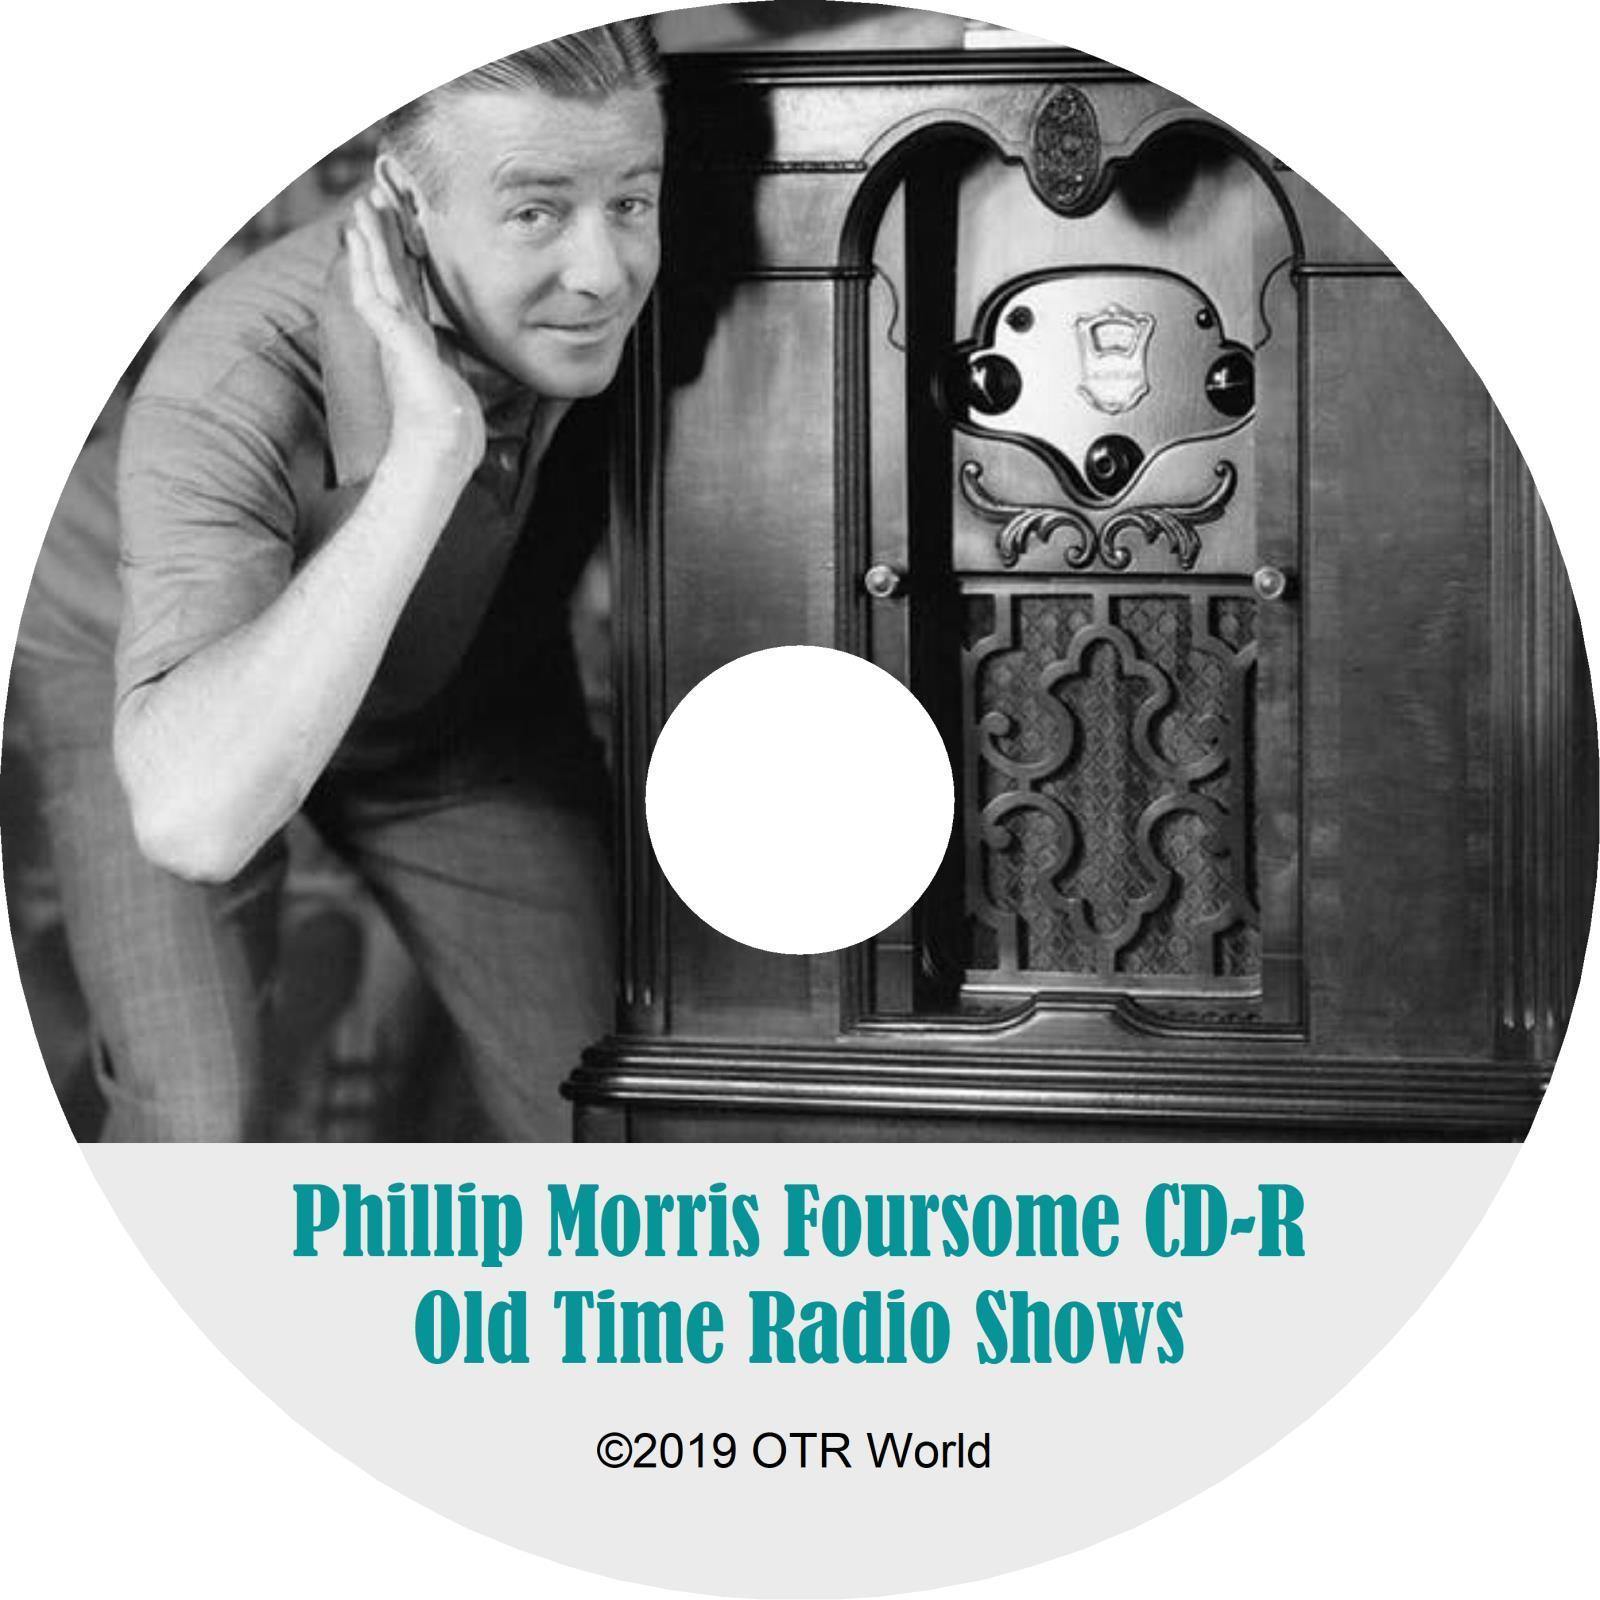 Philip Morris Foursome OTR Old Time Radio Shows MP3 On CD 2 Episodes - OTR World